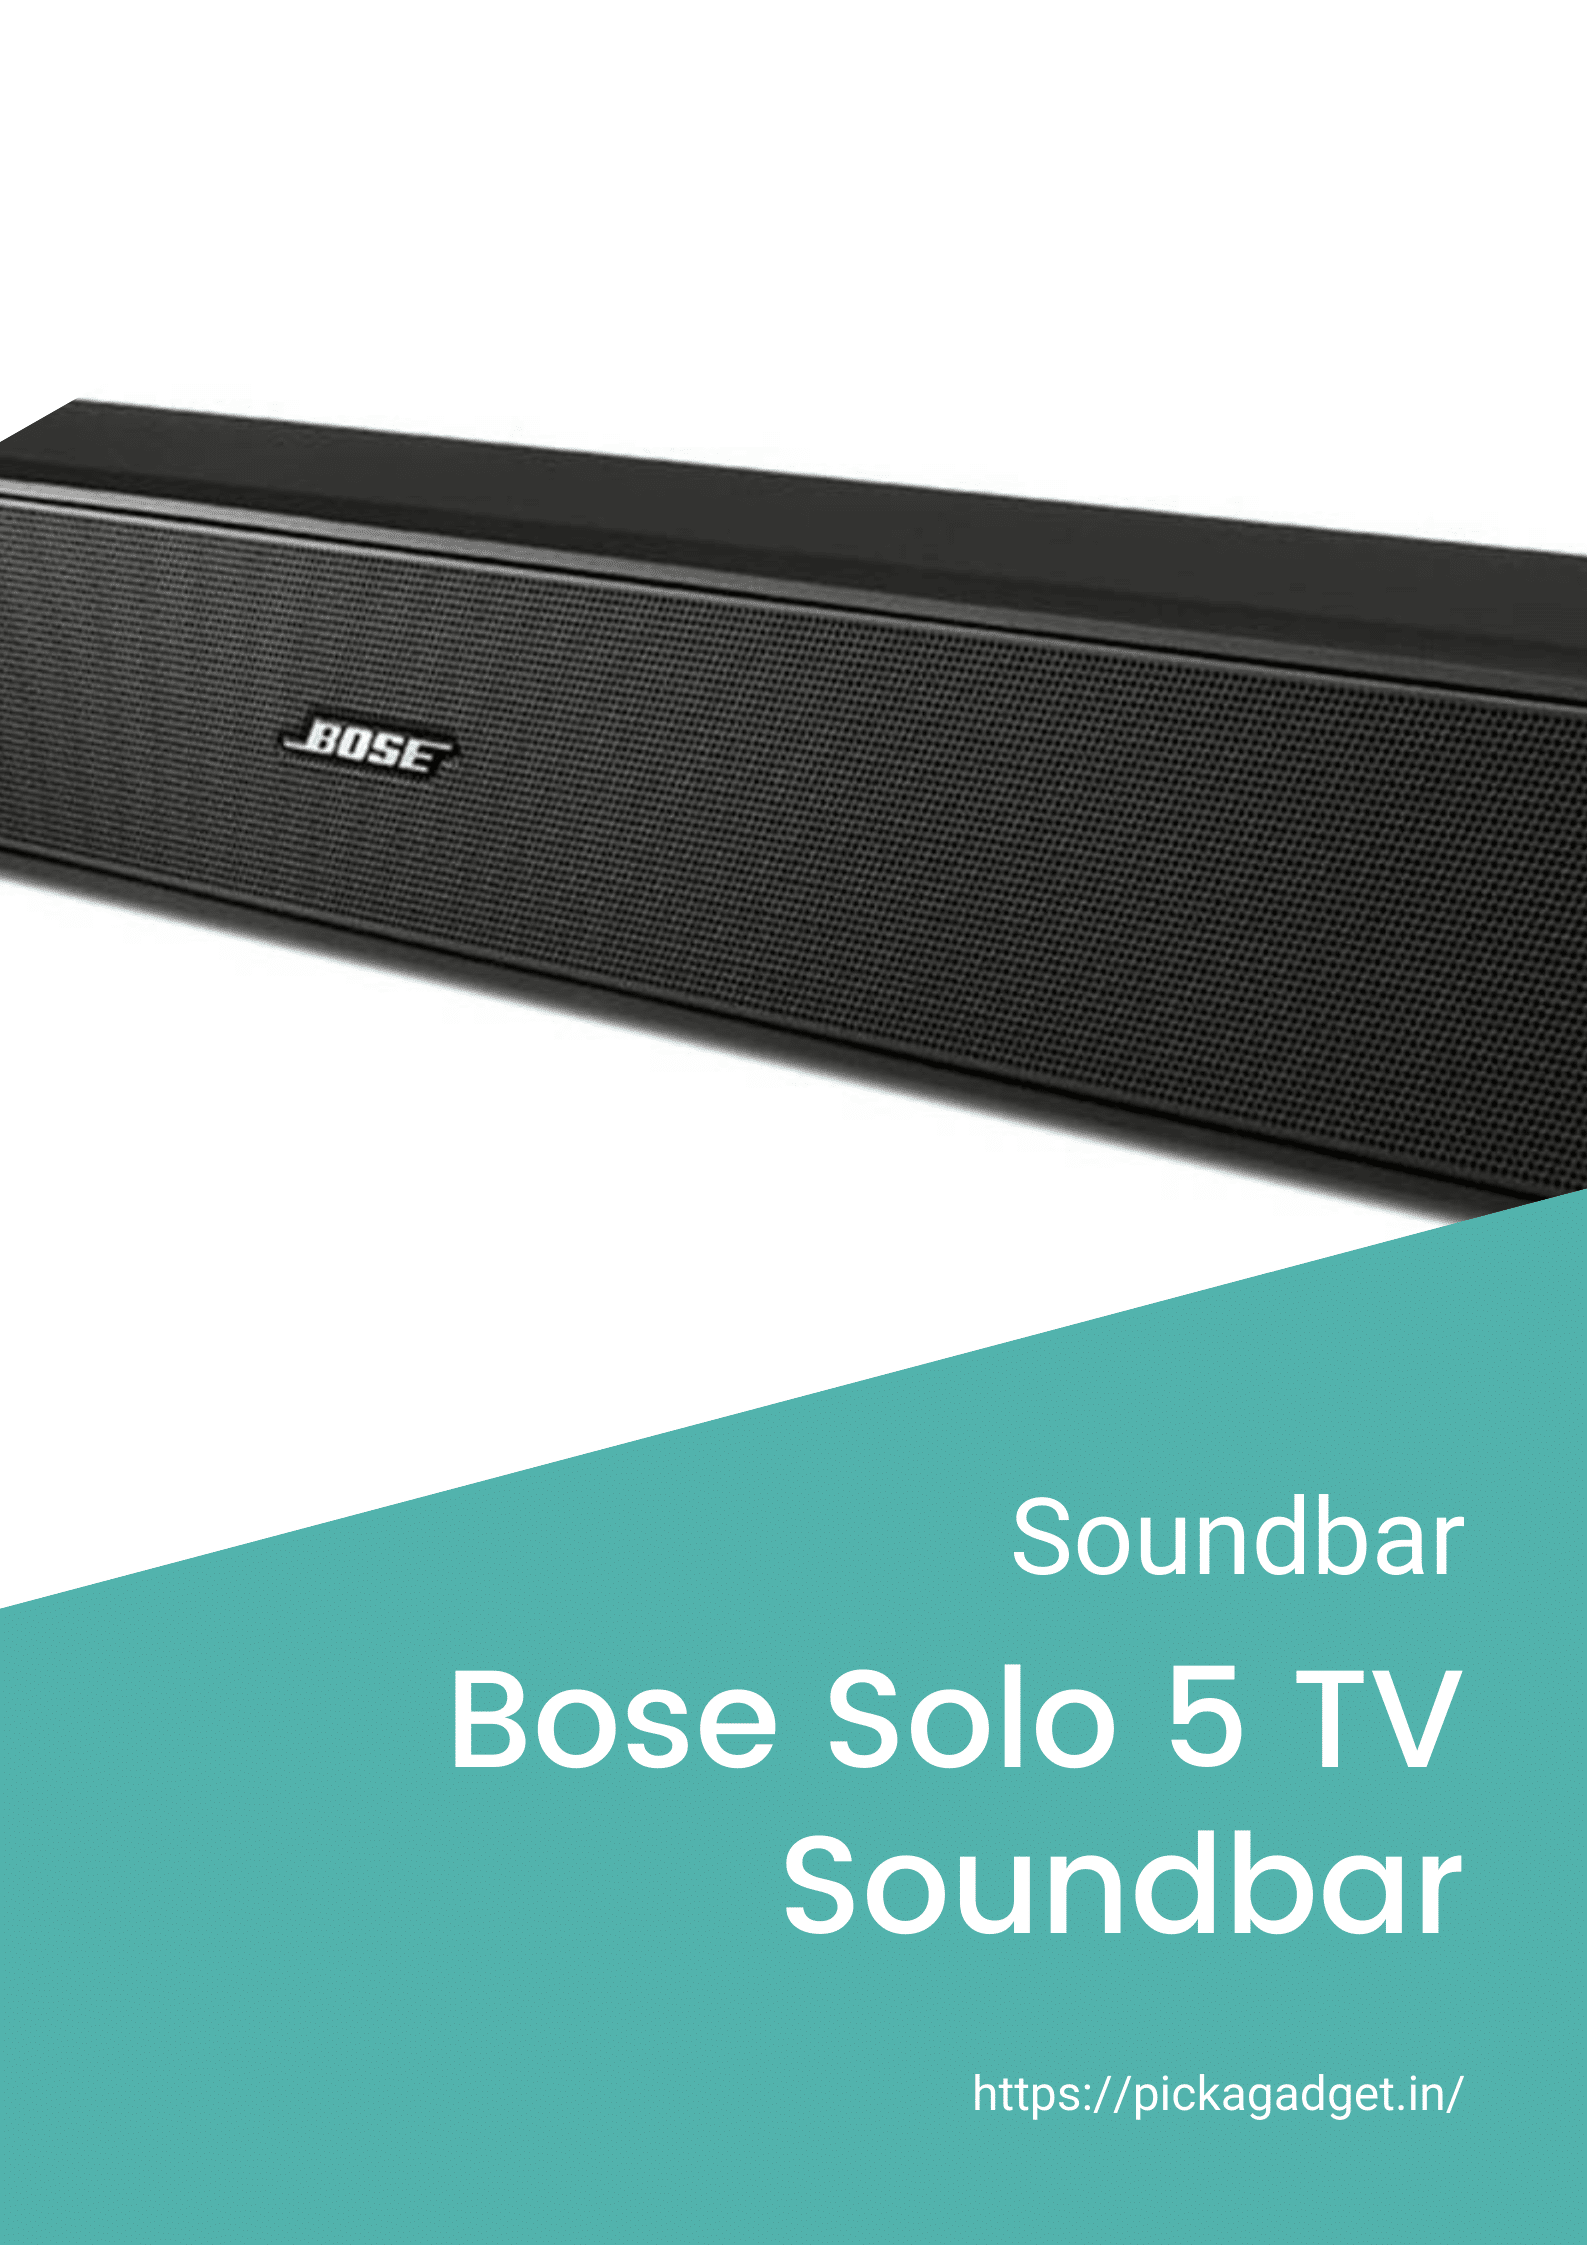 Bose Solo 5 TV Soundbar Review - Is It a Good